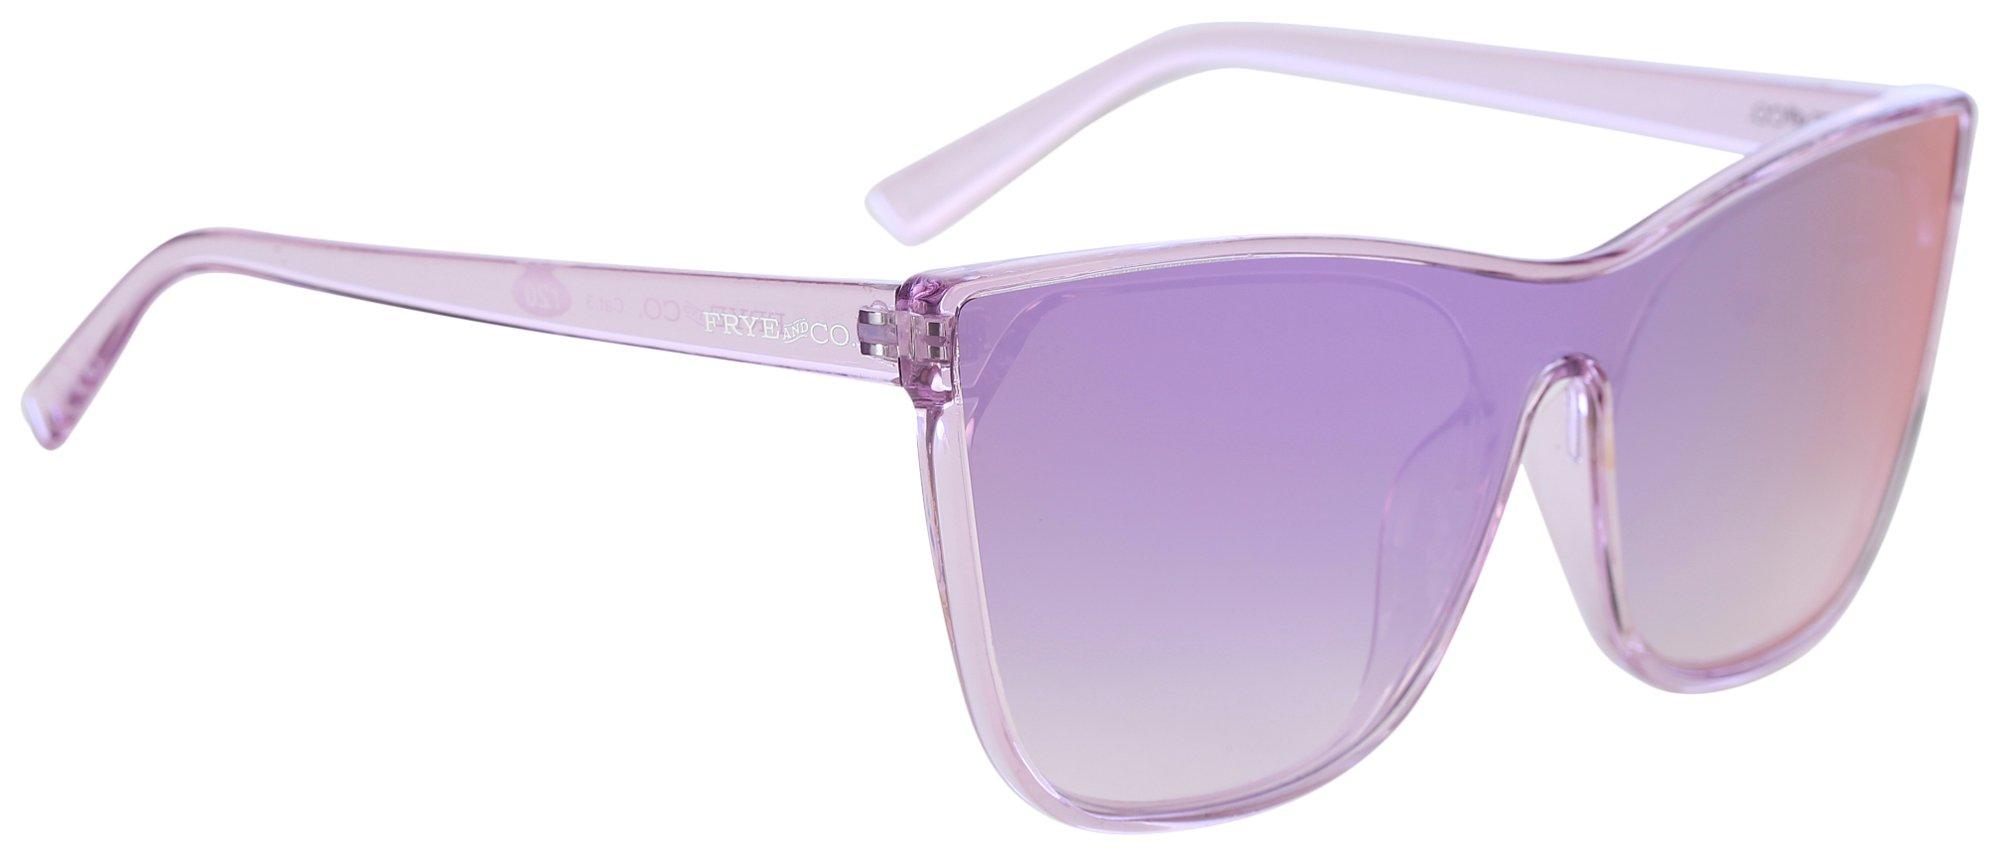 Womens Reflective Translucent Frame Sunglasses